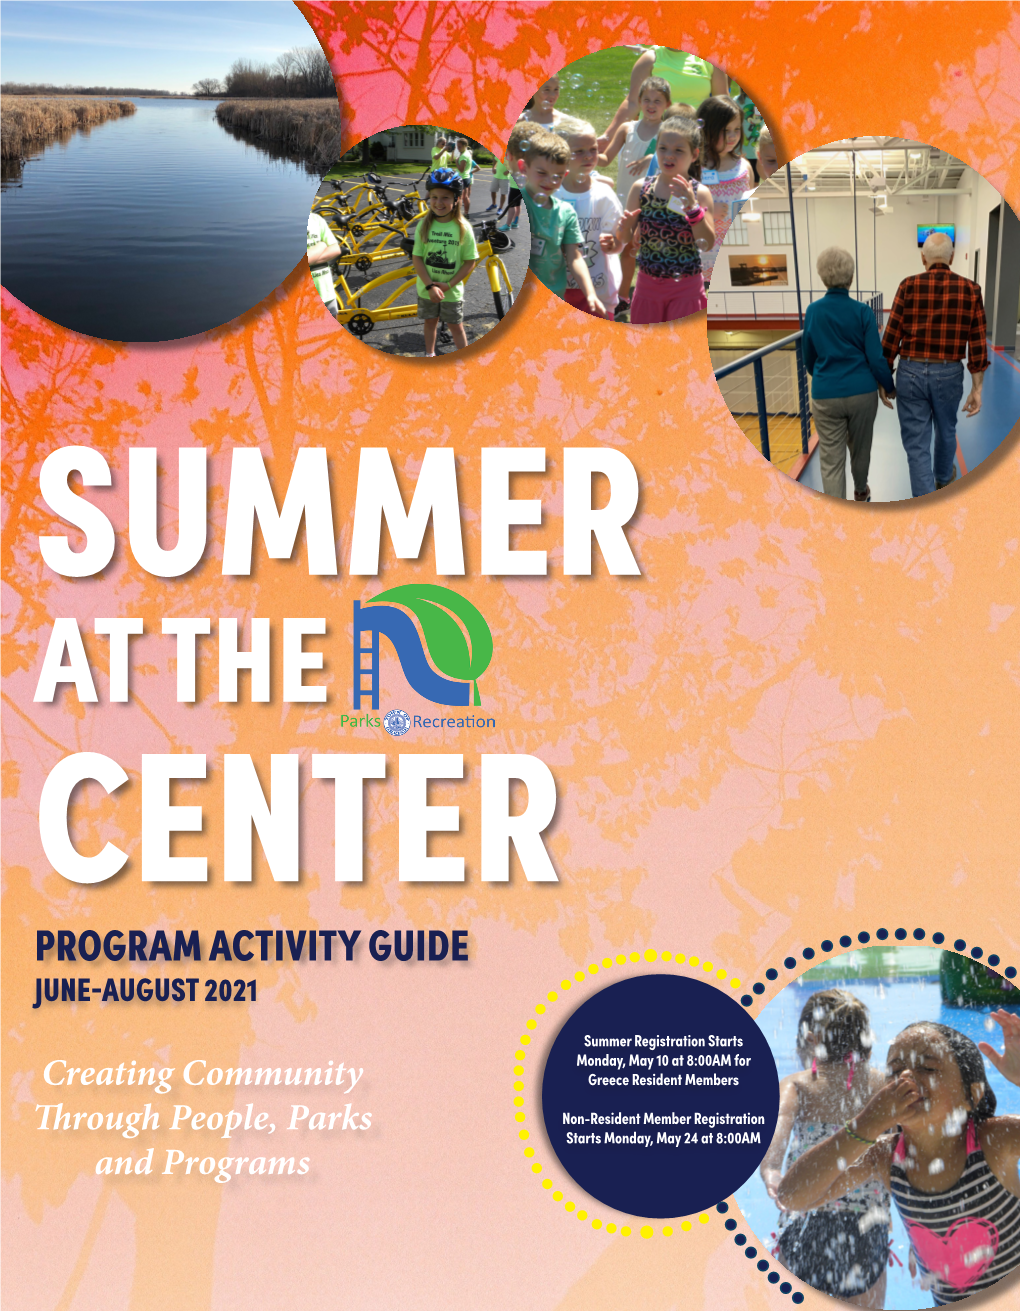 Program Activity Guide June-August 2021